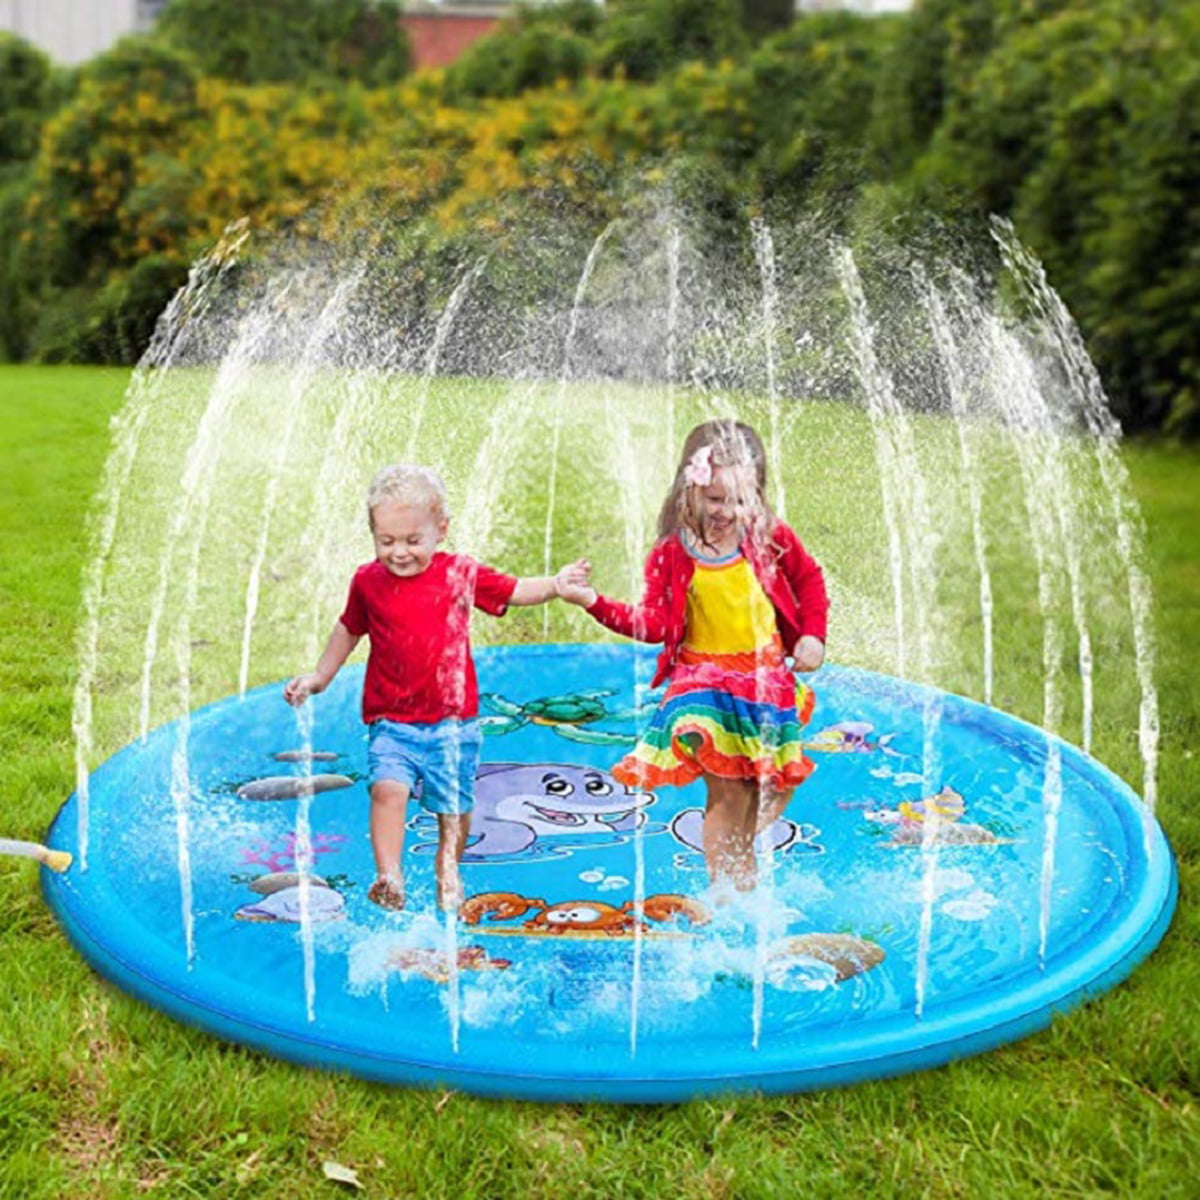 PELLOR Splash Play Mat for Kids 68 Outdoor Water Sprinkle Fun Backyard Fountain Play Mat Backyard Sprinkler Toy Splash Pad for Boys Girls and Children